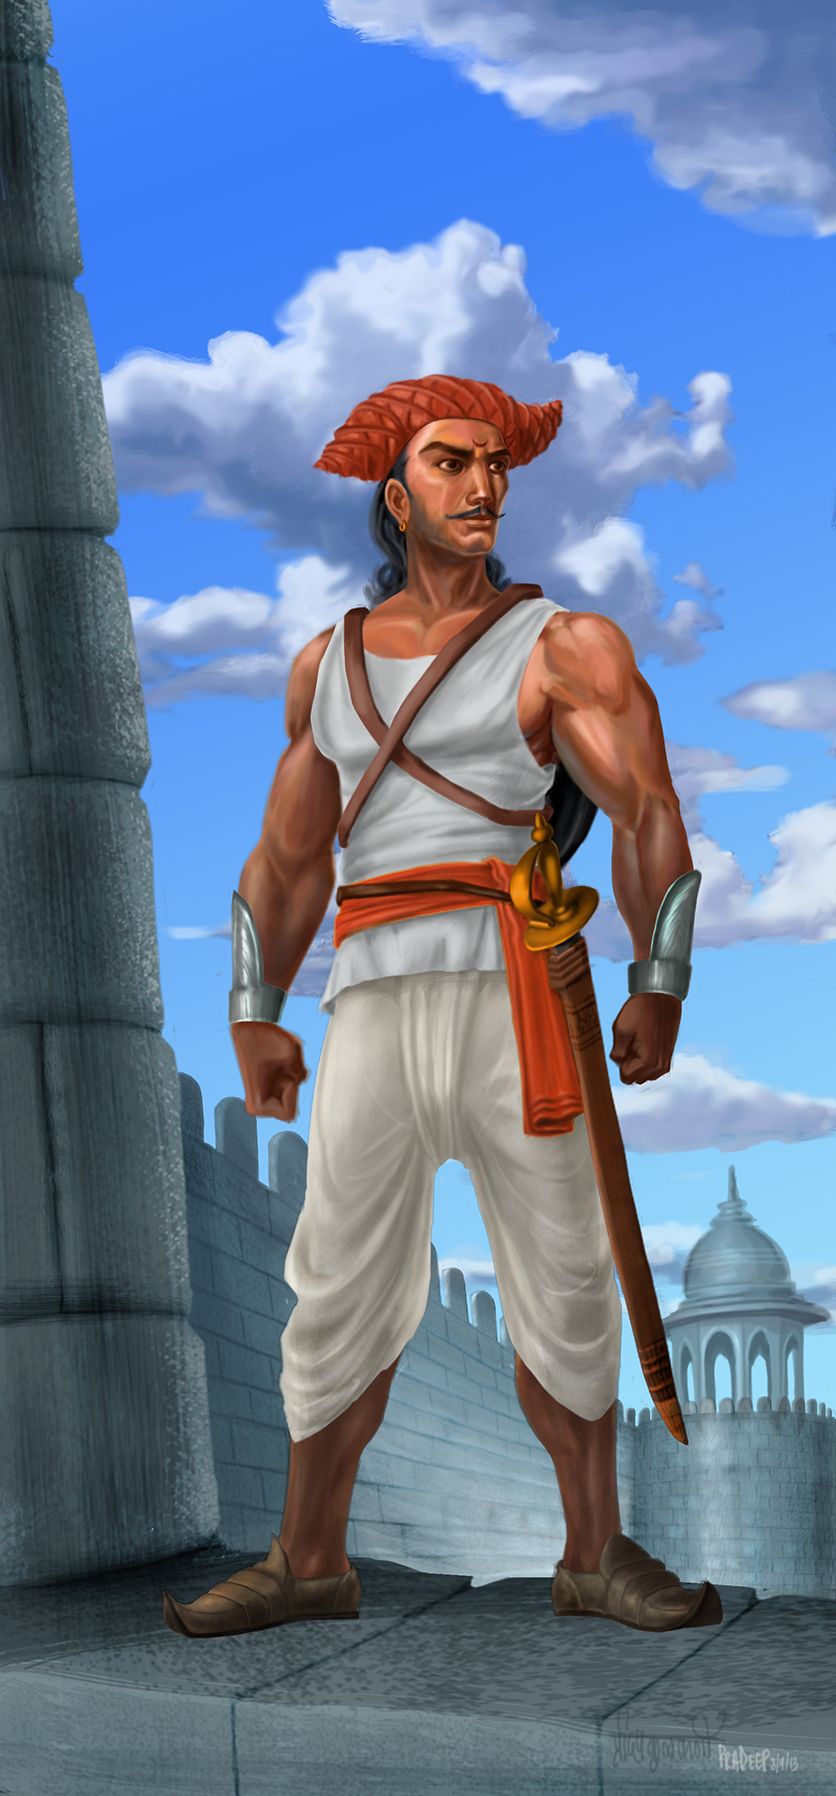 Maratha Warrior #animatorpradeep72 .com